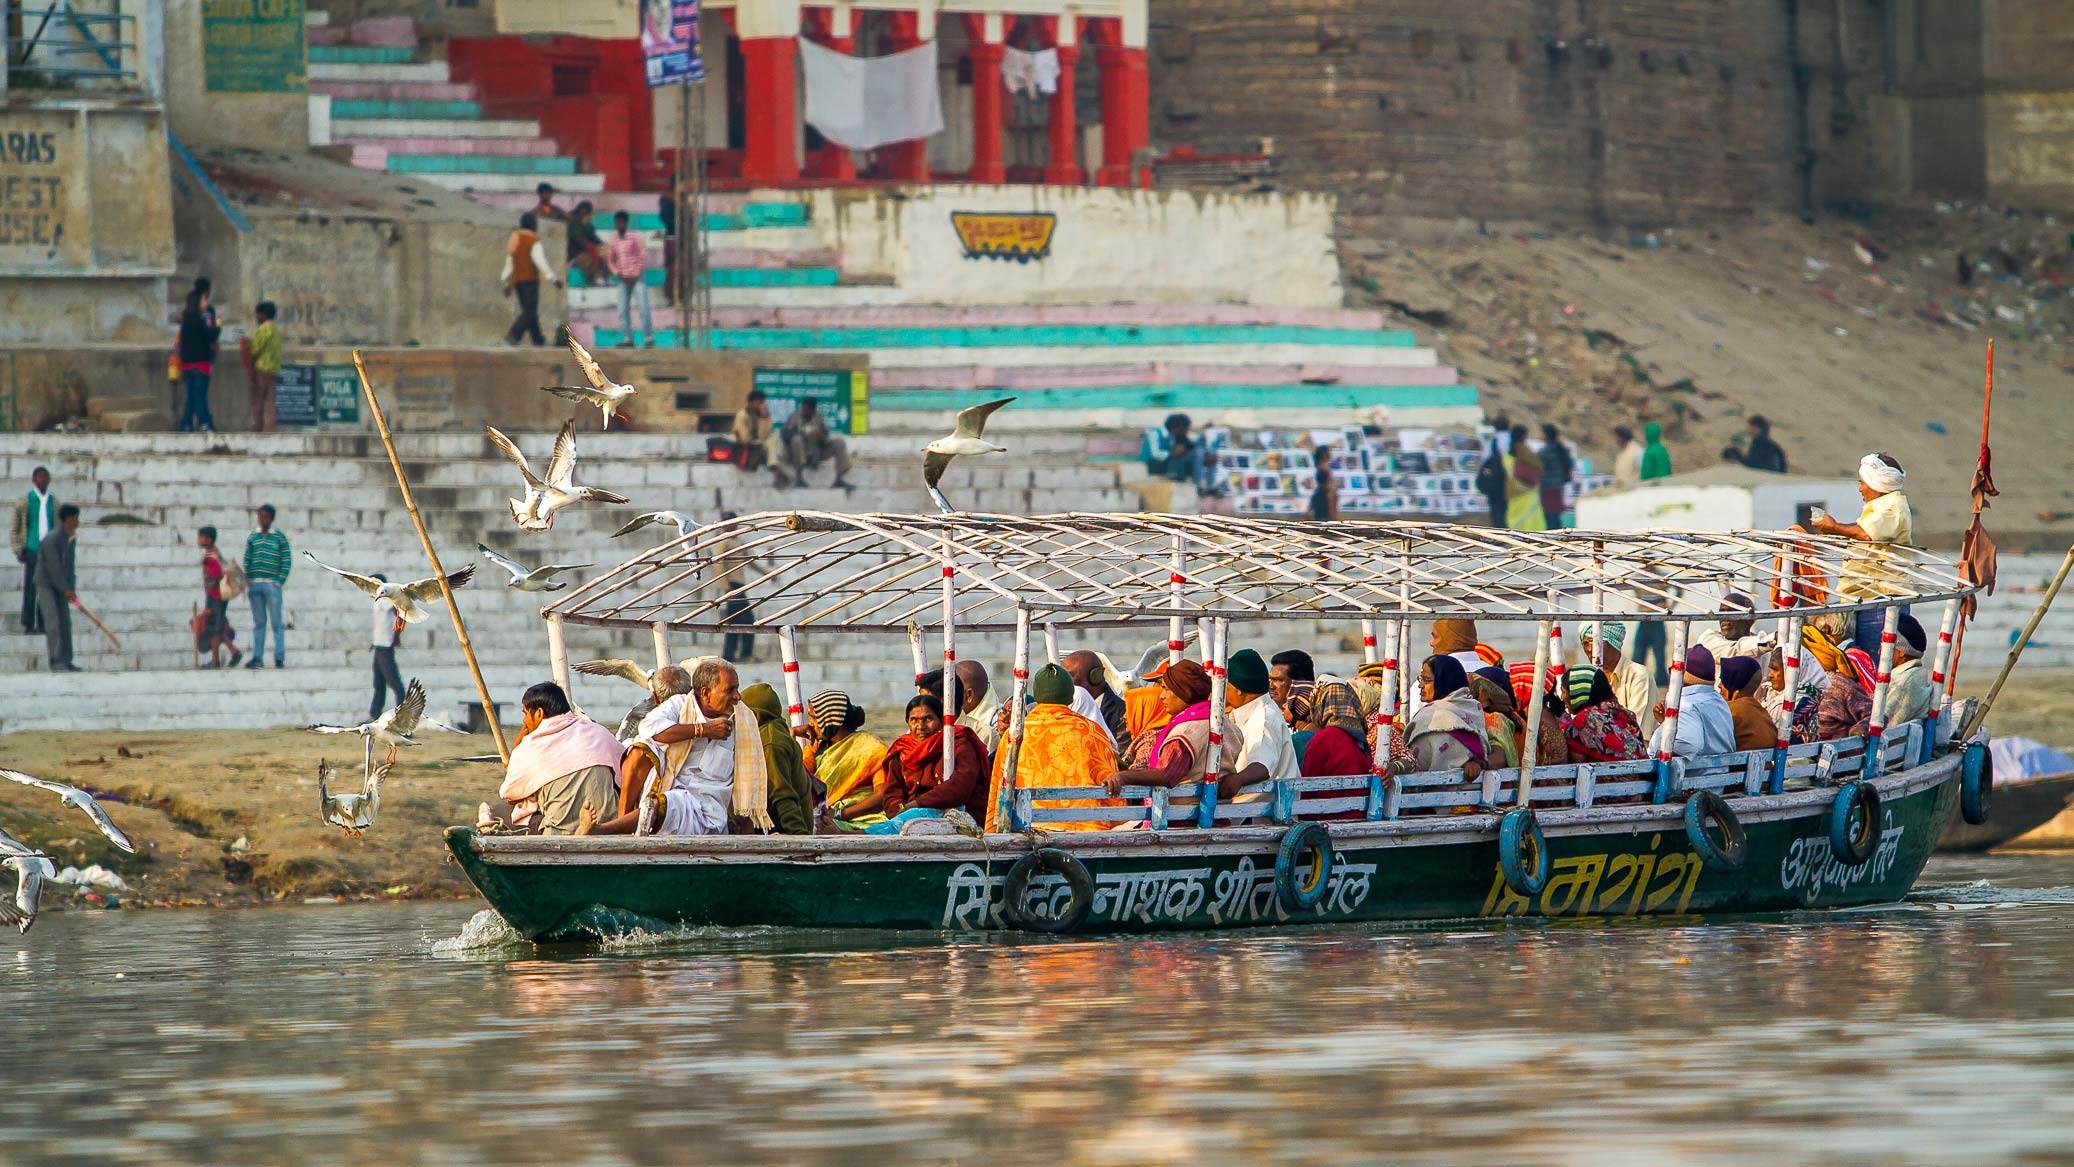 /Guewen/galeries/public/Voyages/Inde/varanasi/gange/Ganga-1/Varanasi-gange_035.jpg